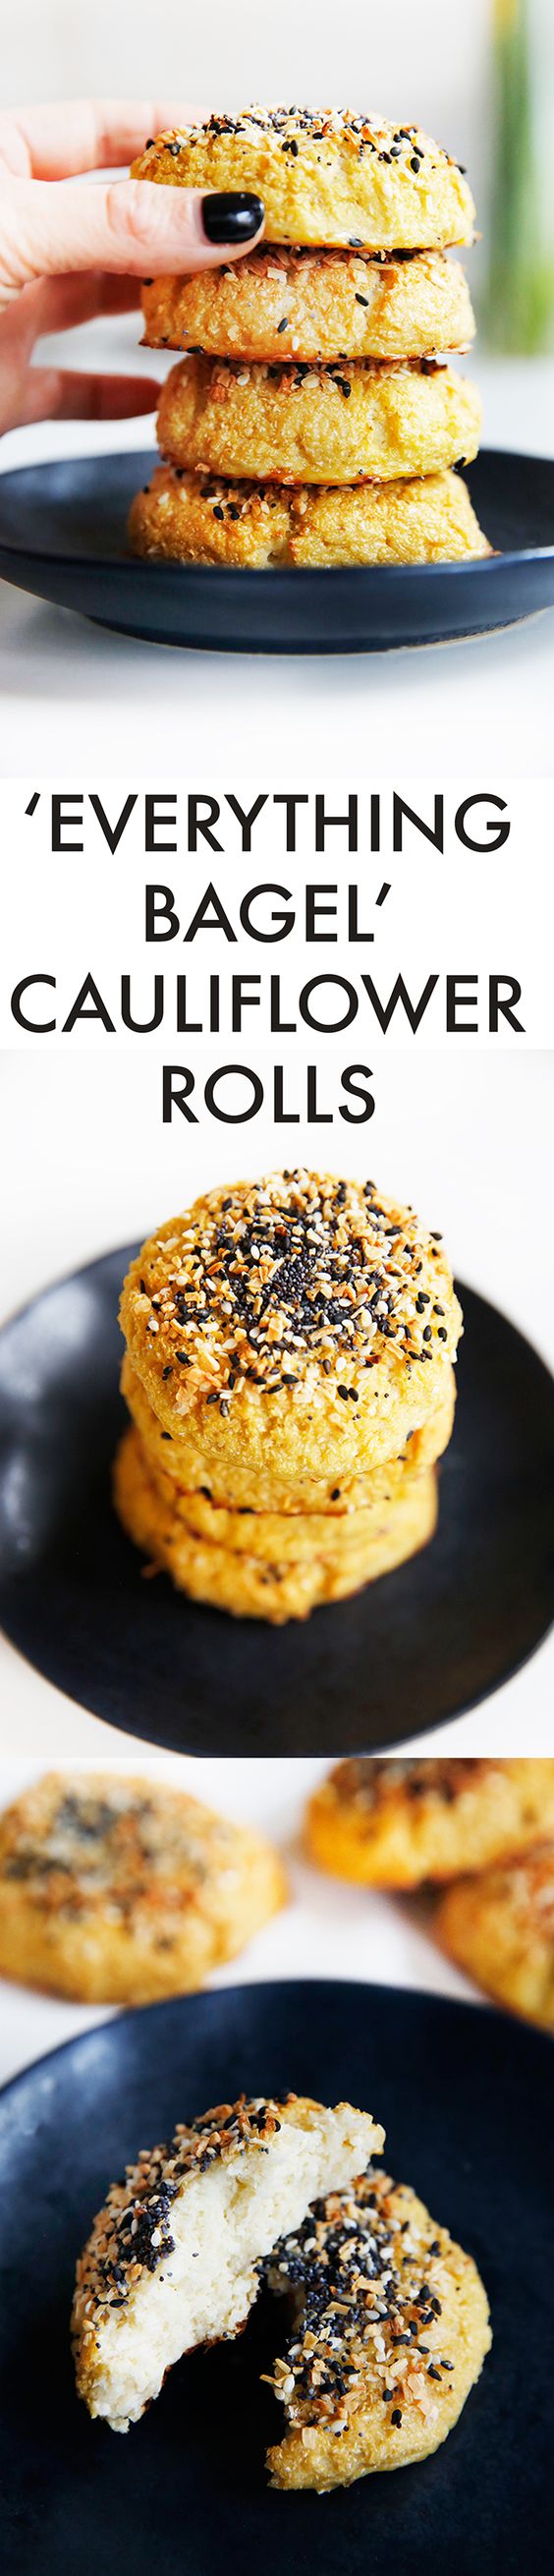 ‘everything bagel’ topped cauliflower rolls [video]